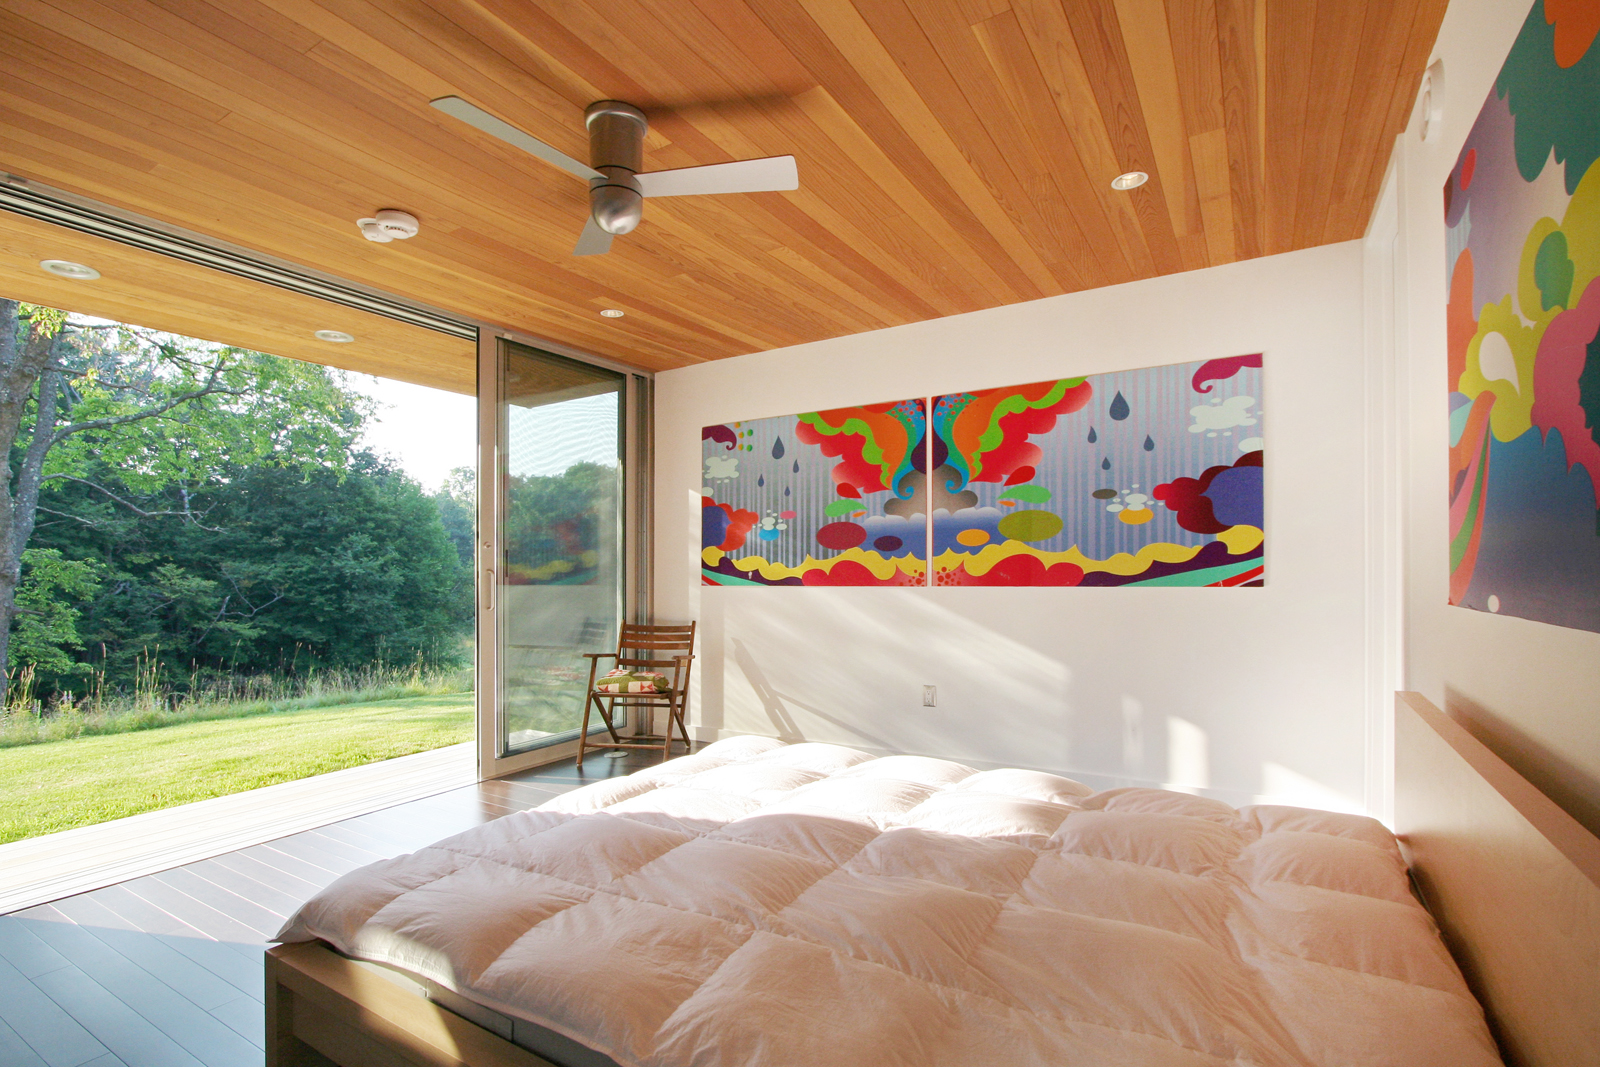 09-res4-resolution-4-architecture-modern-modular-home-prefab-sunset-ridge-house-interior-open-bedroom.jpg